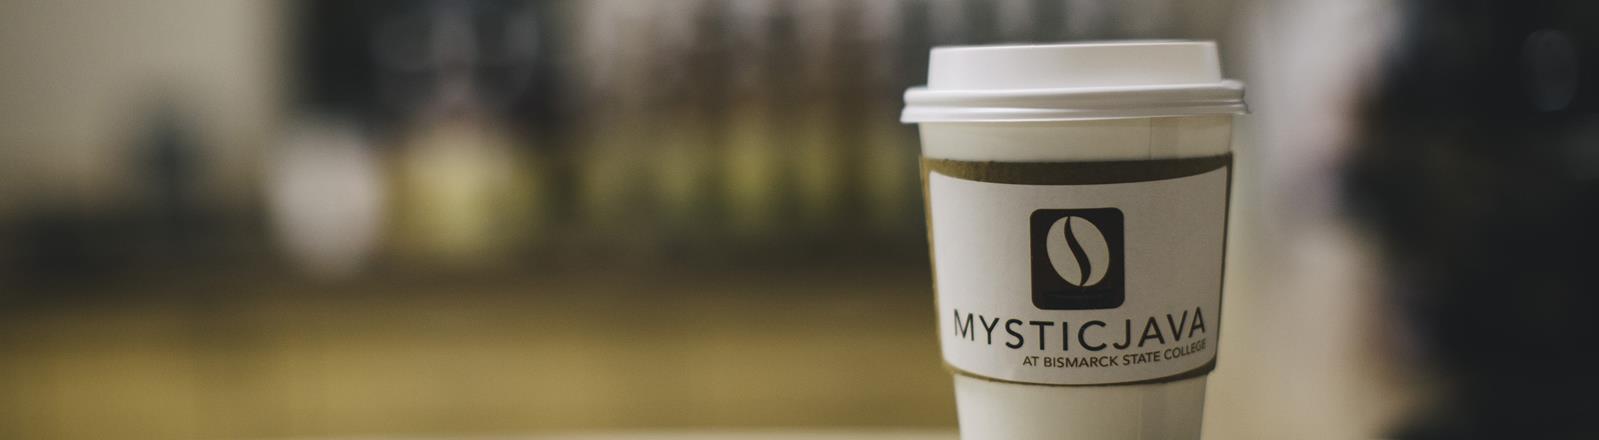 Mystic Java Coffee Shops - 